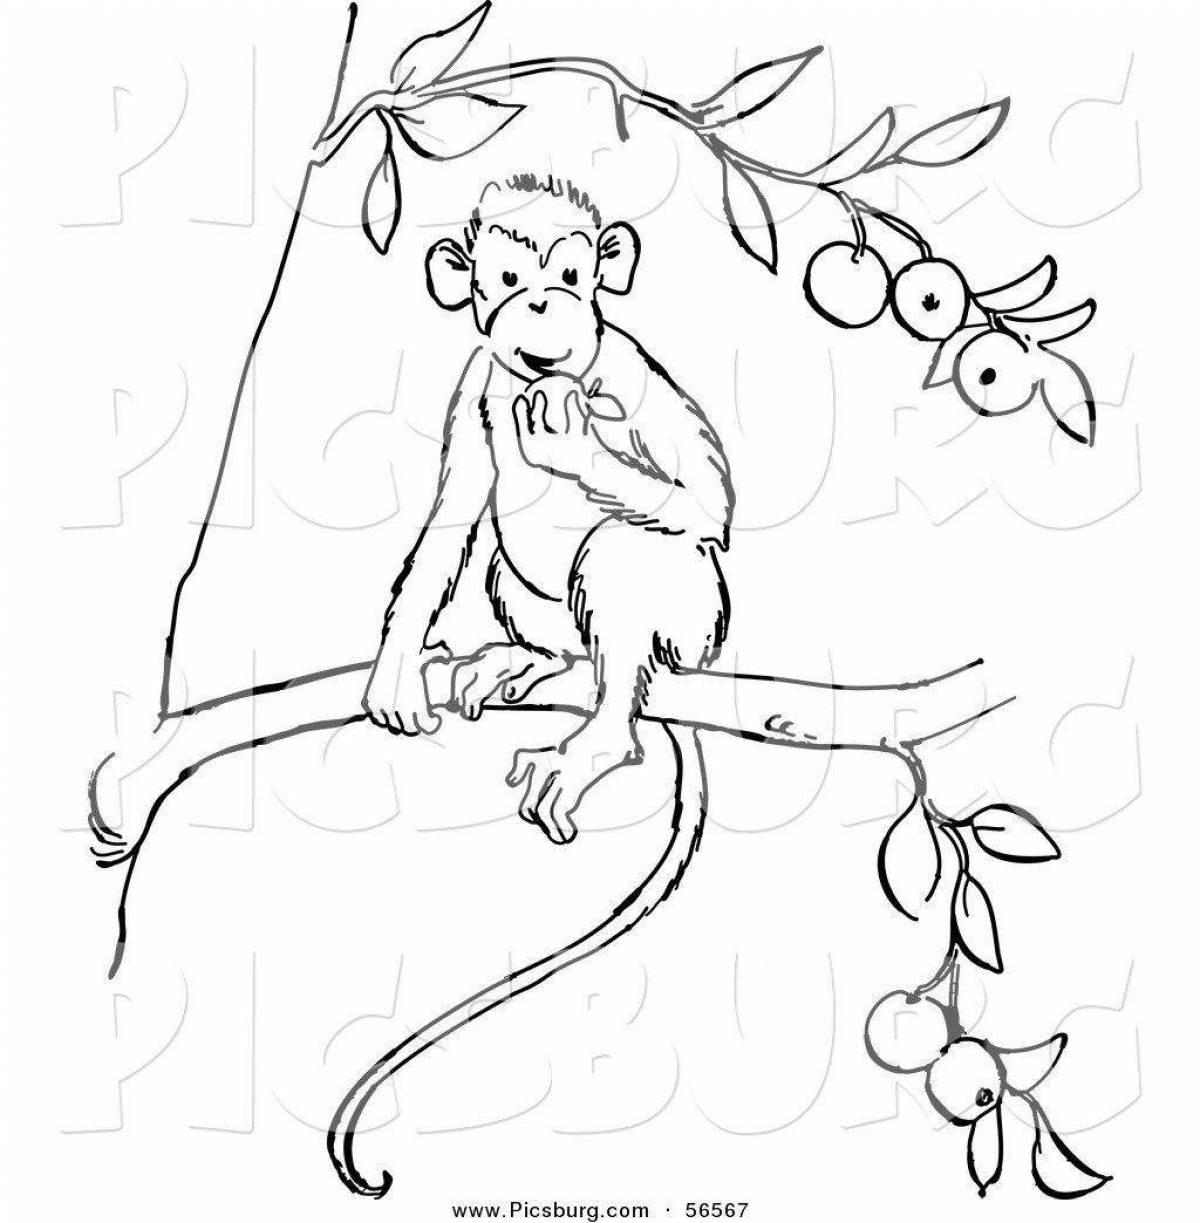 Charming monkey zhitkov coloring